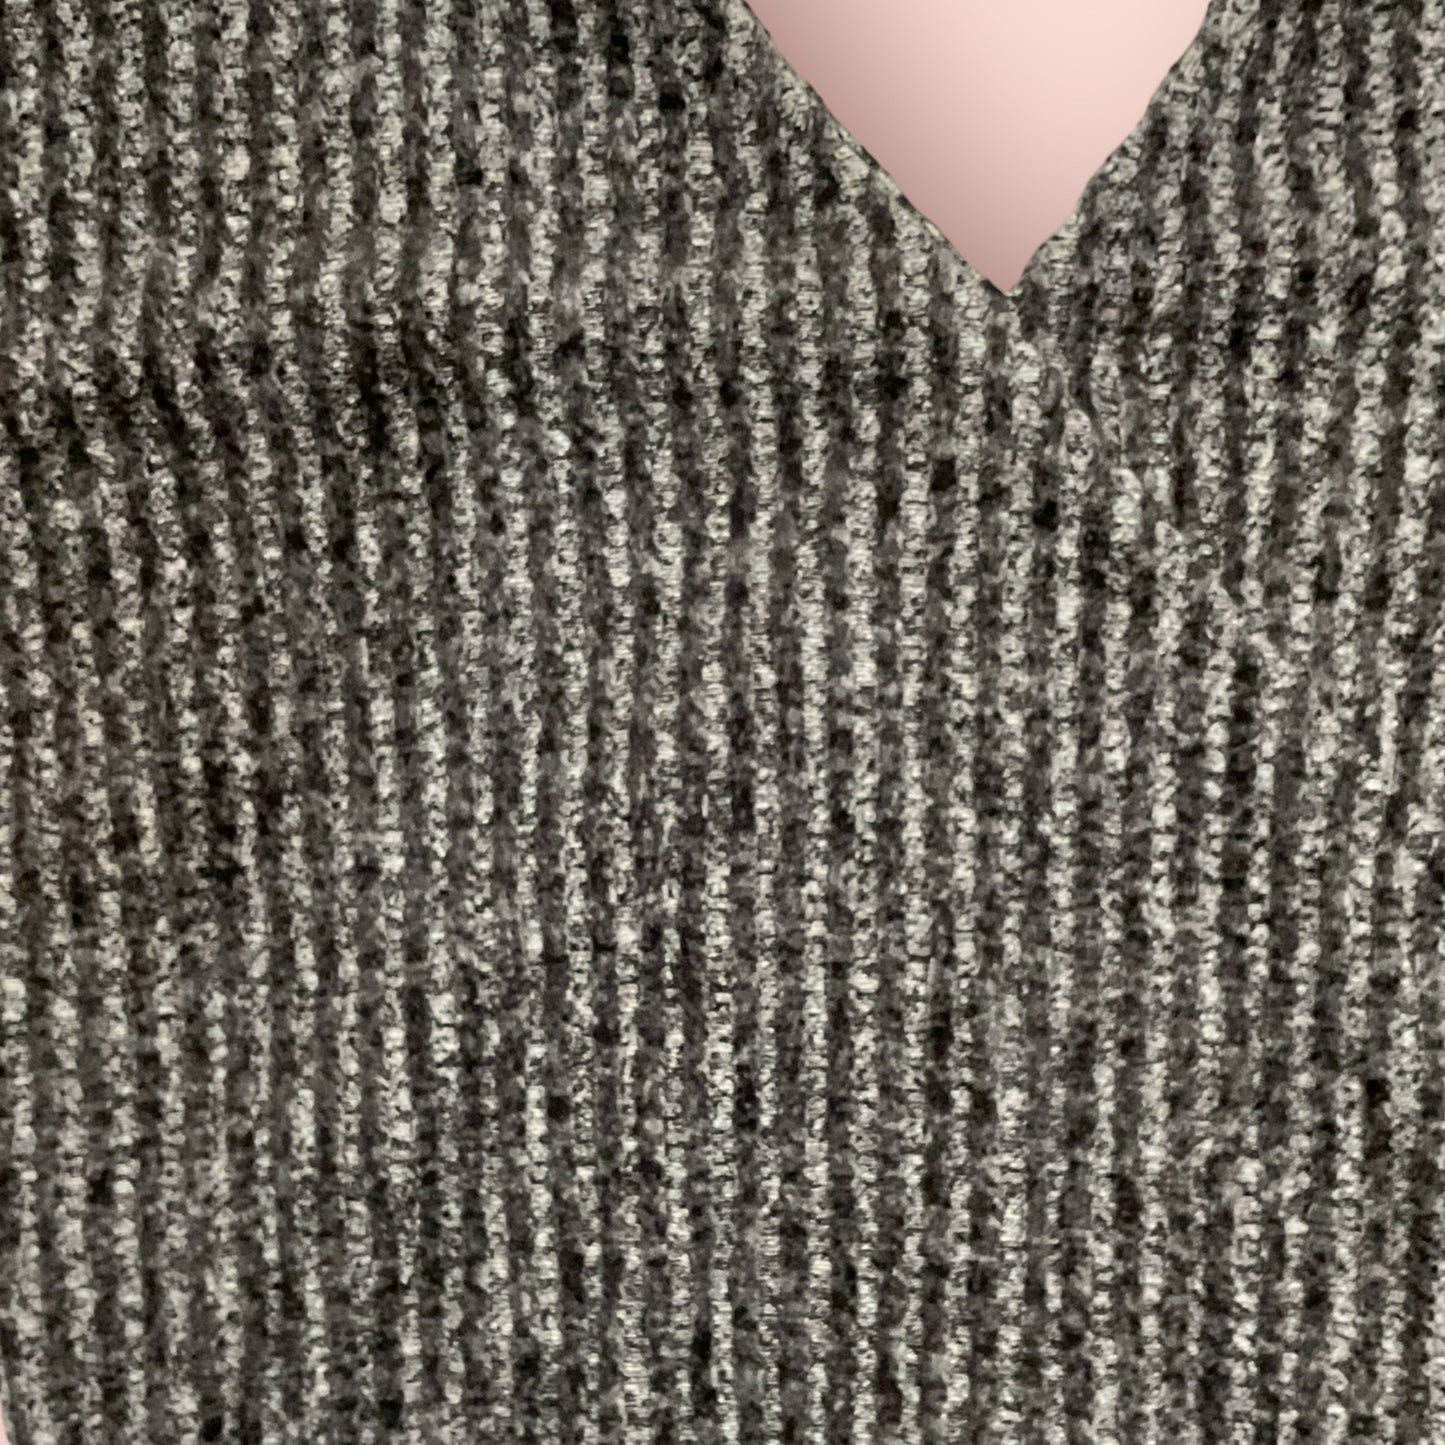 Express Size L Like New Gray Sweater